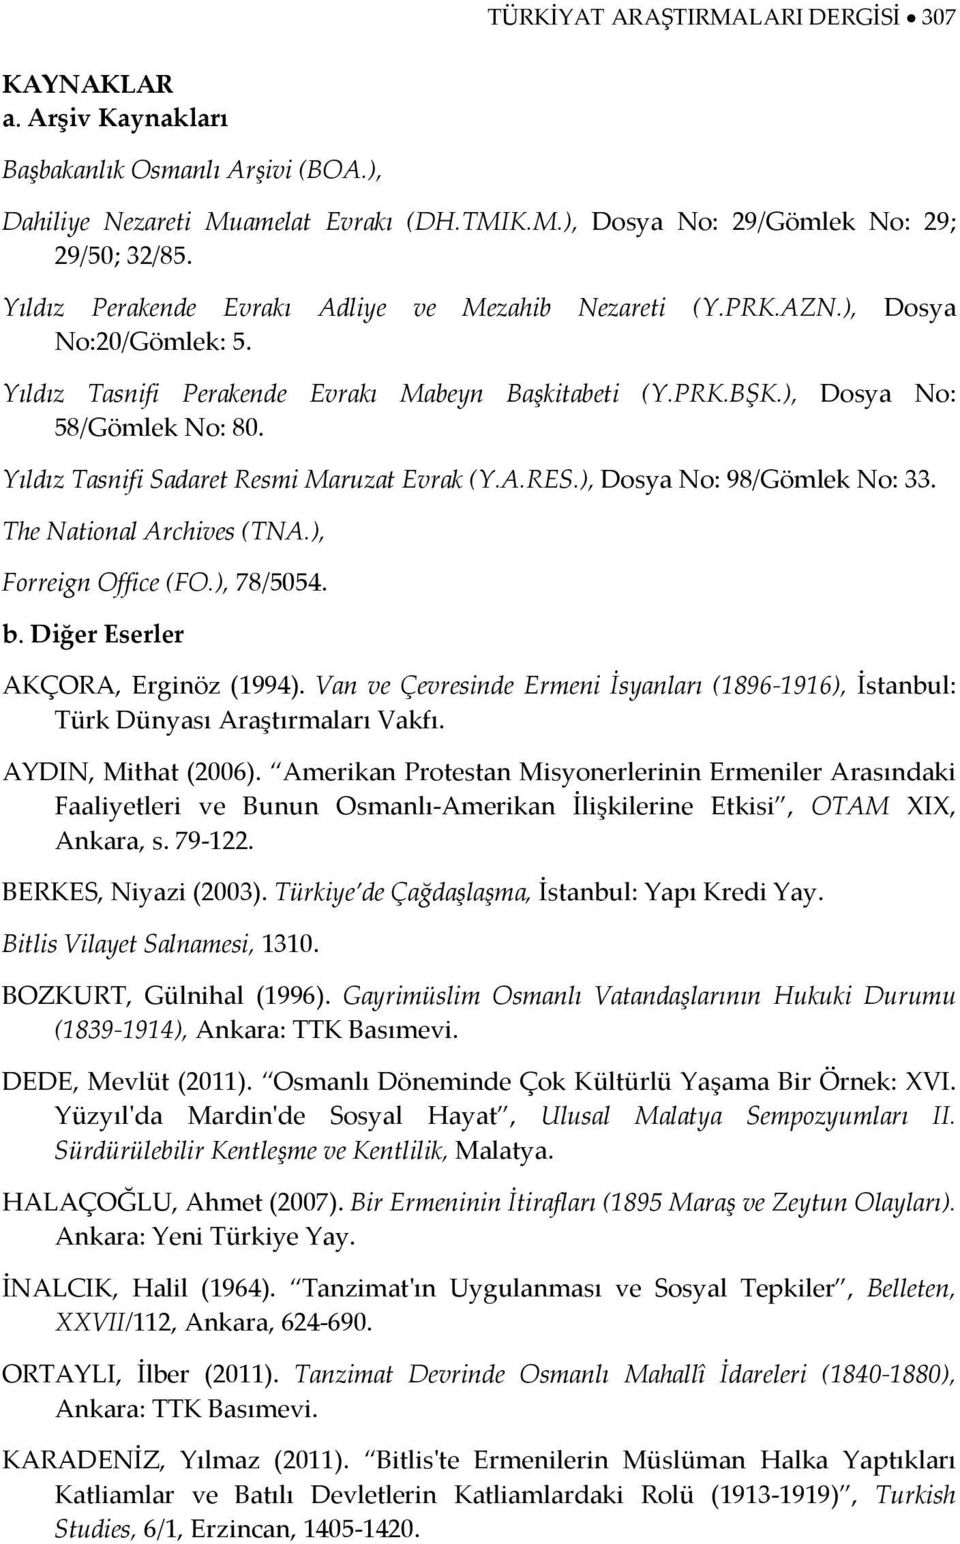 Yıldız Tasnifi Sadaret Resmi Maruzat Evrak (Y.A.RES.), Dosya No: 98/Gömlek No: 33. The National Archives (TNA.), Forreign Office (FO.), 78/5054. b. Diğer Eserler AKÇORA, Erginöz (1994).